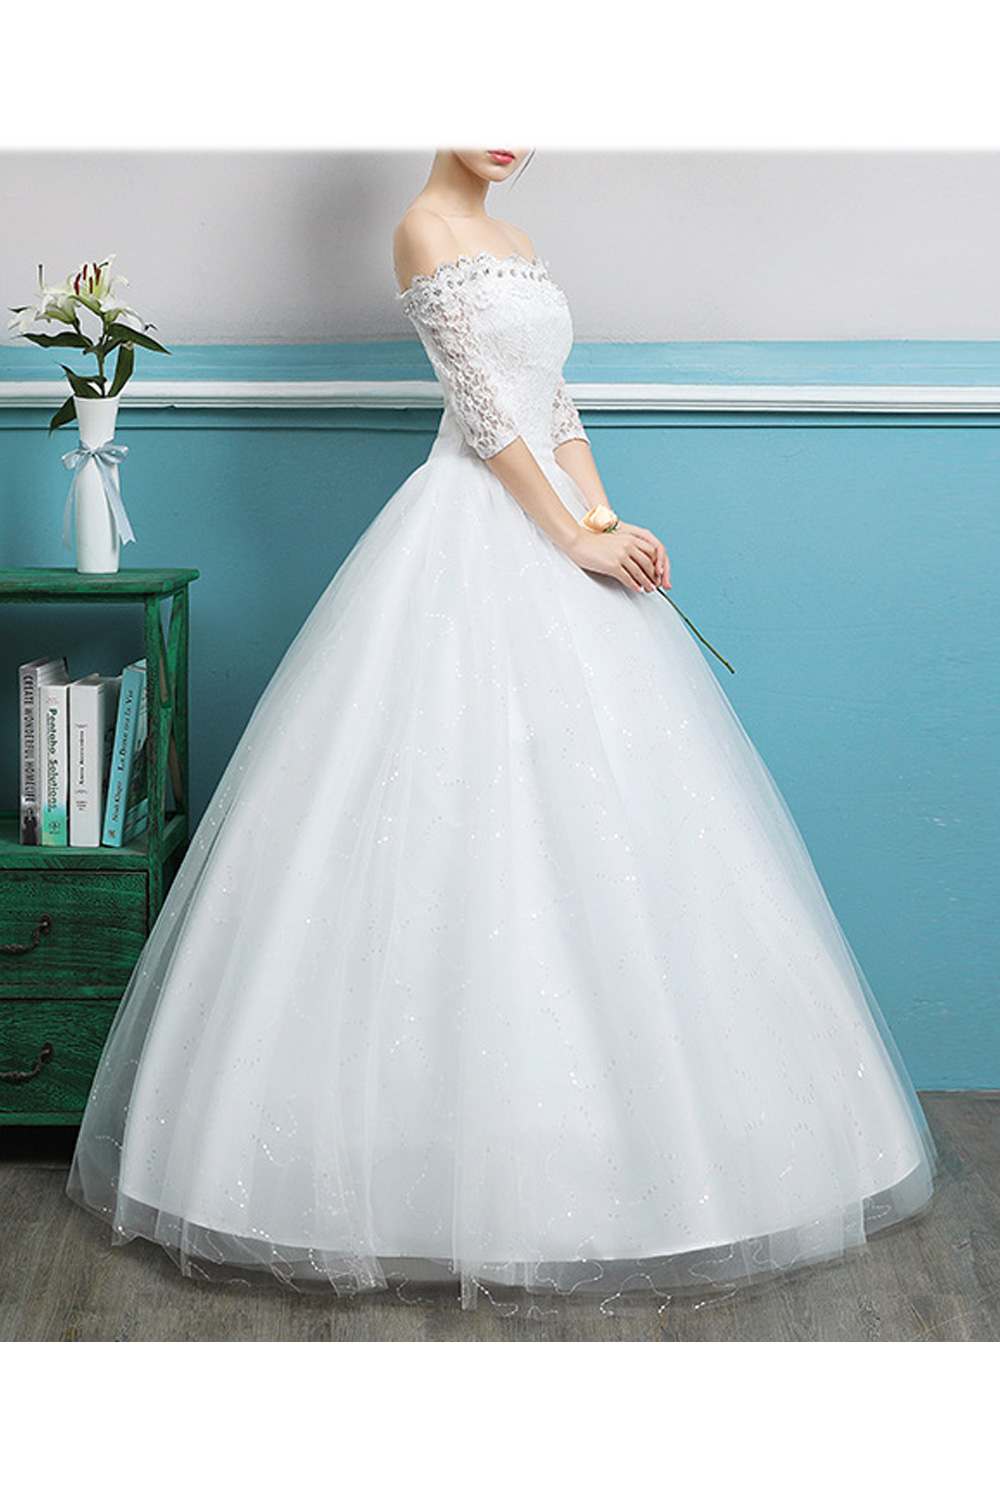 Tom Carry Women Breathable Half Sleeve Off-Shoulder Solid Colored Skirt Wedding Dress